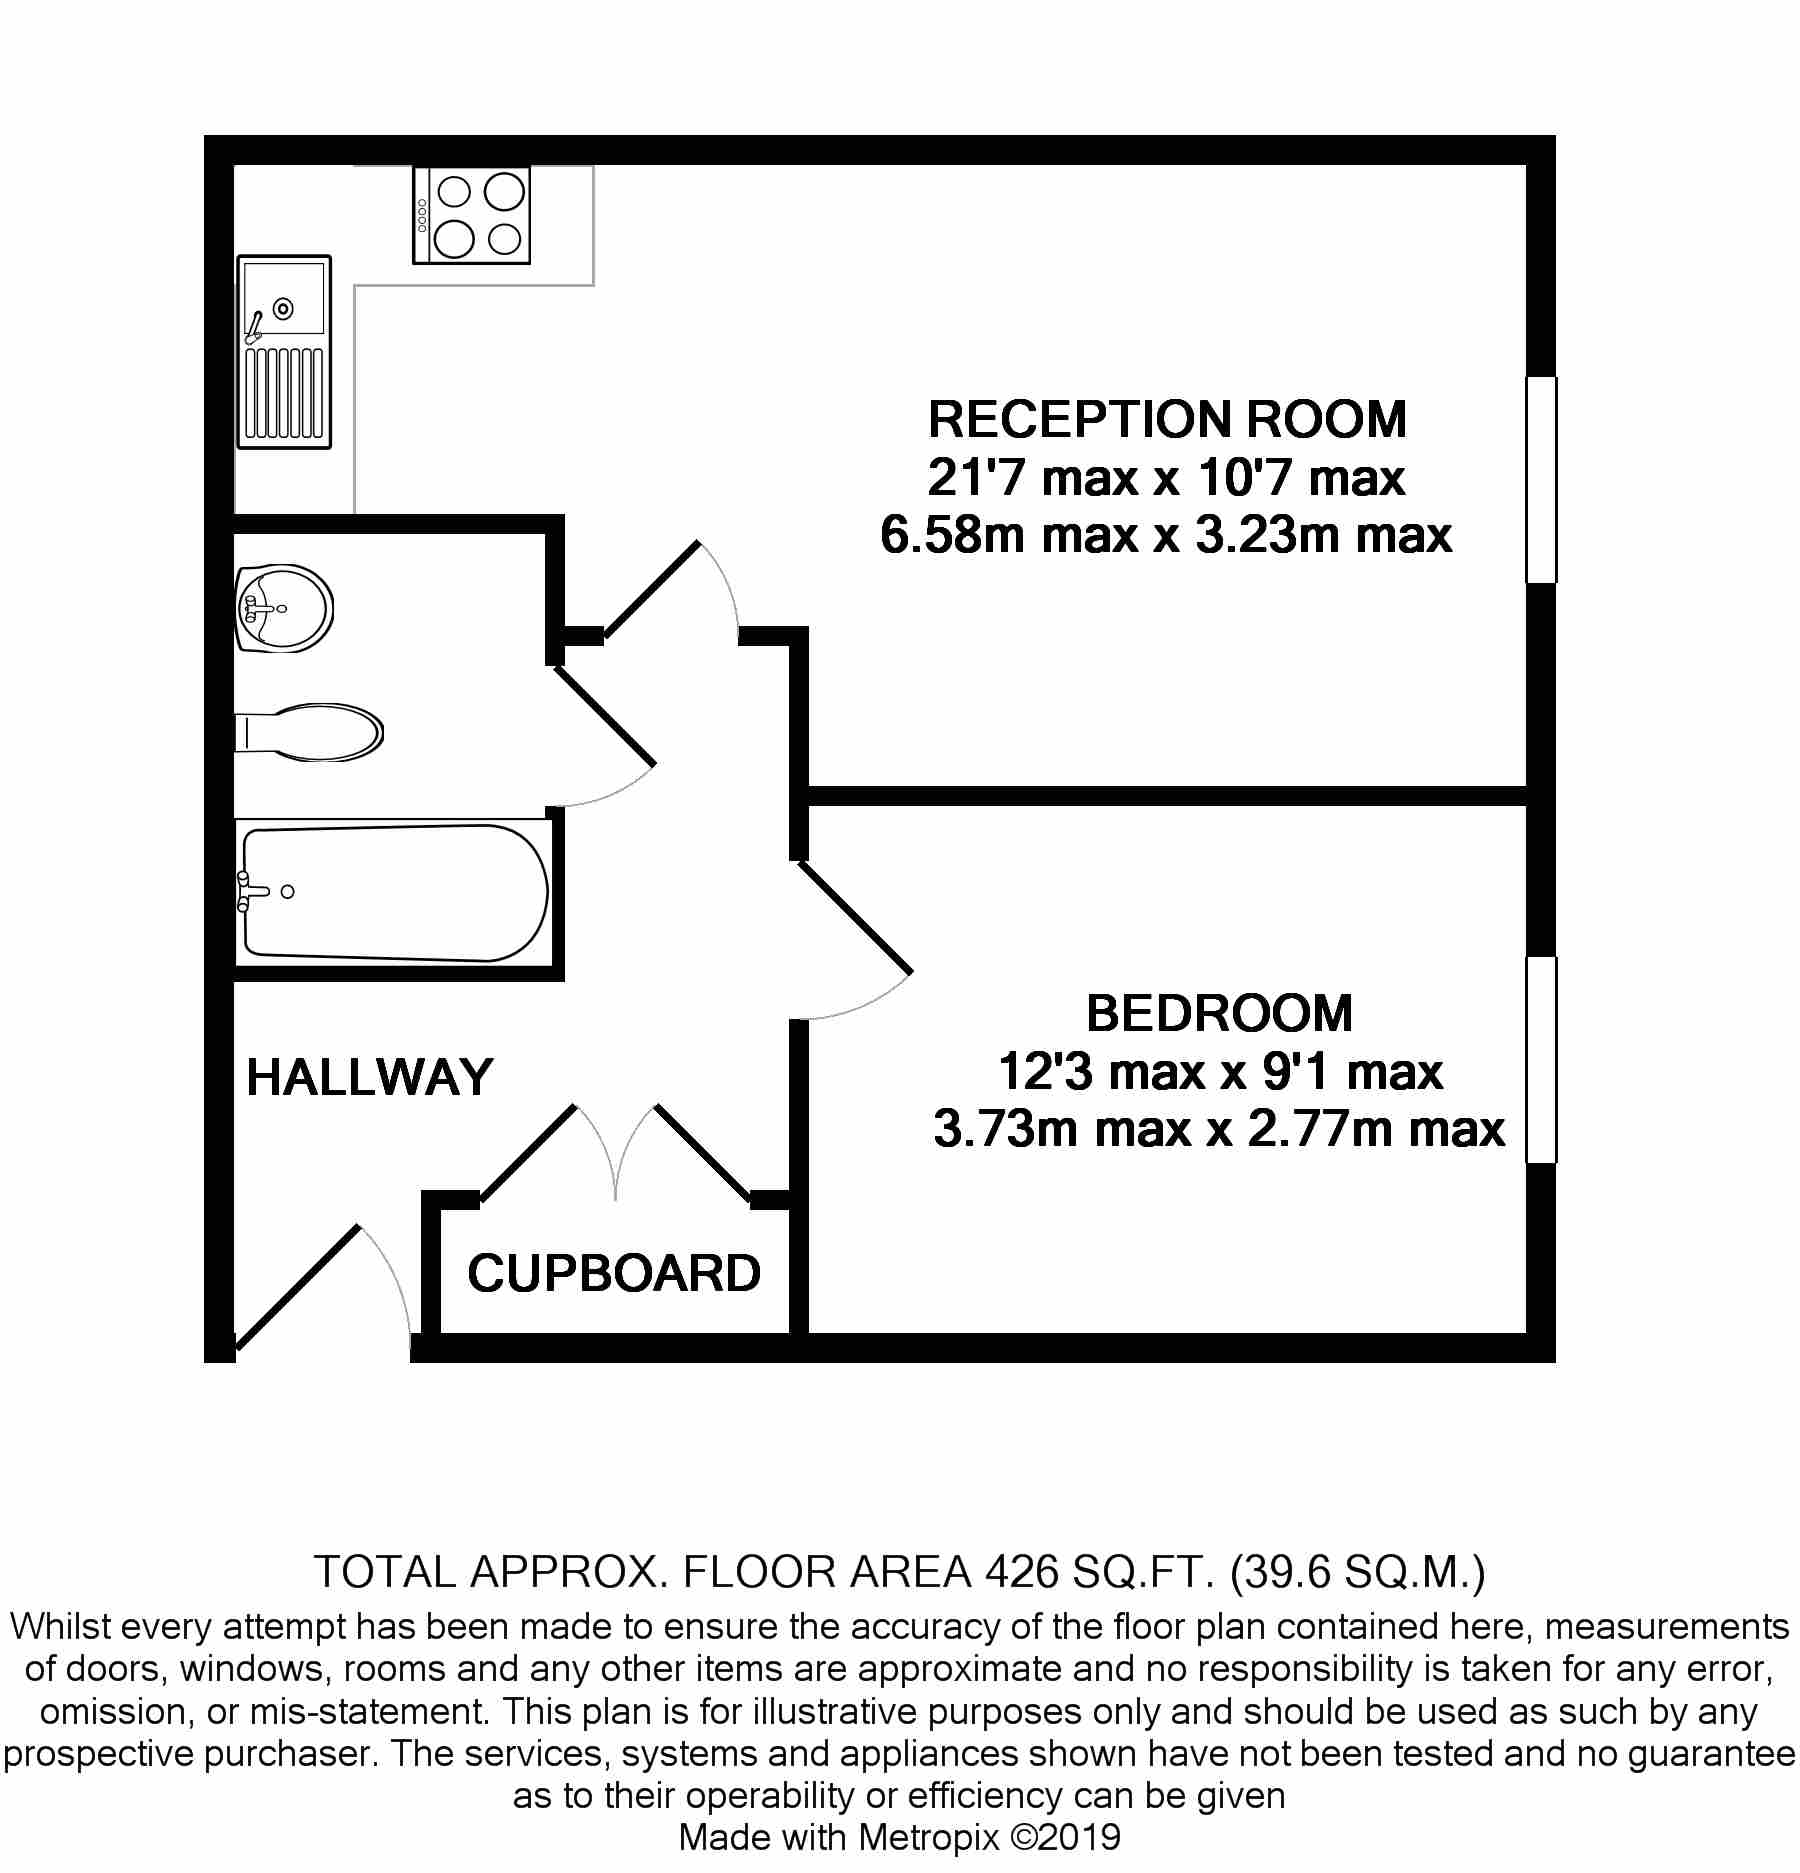 1 Bedrooms Flat to rent in Harrow Close, Addlestone, Surrey KT15